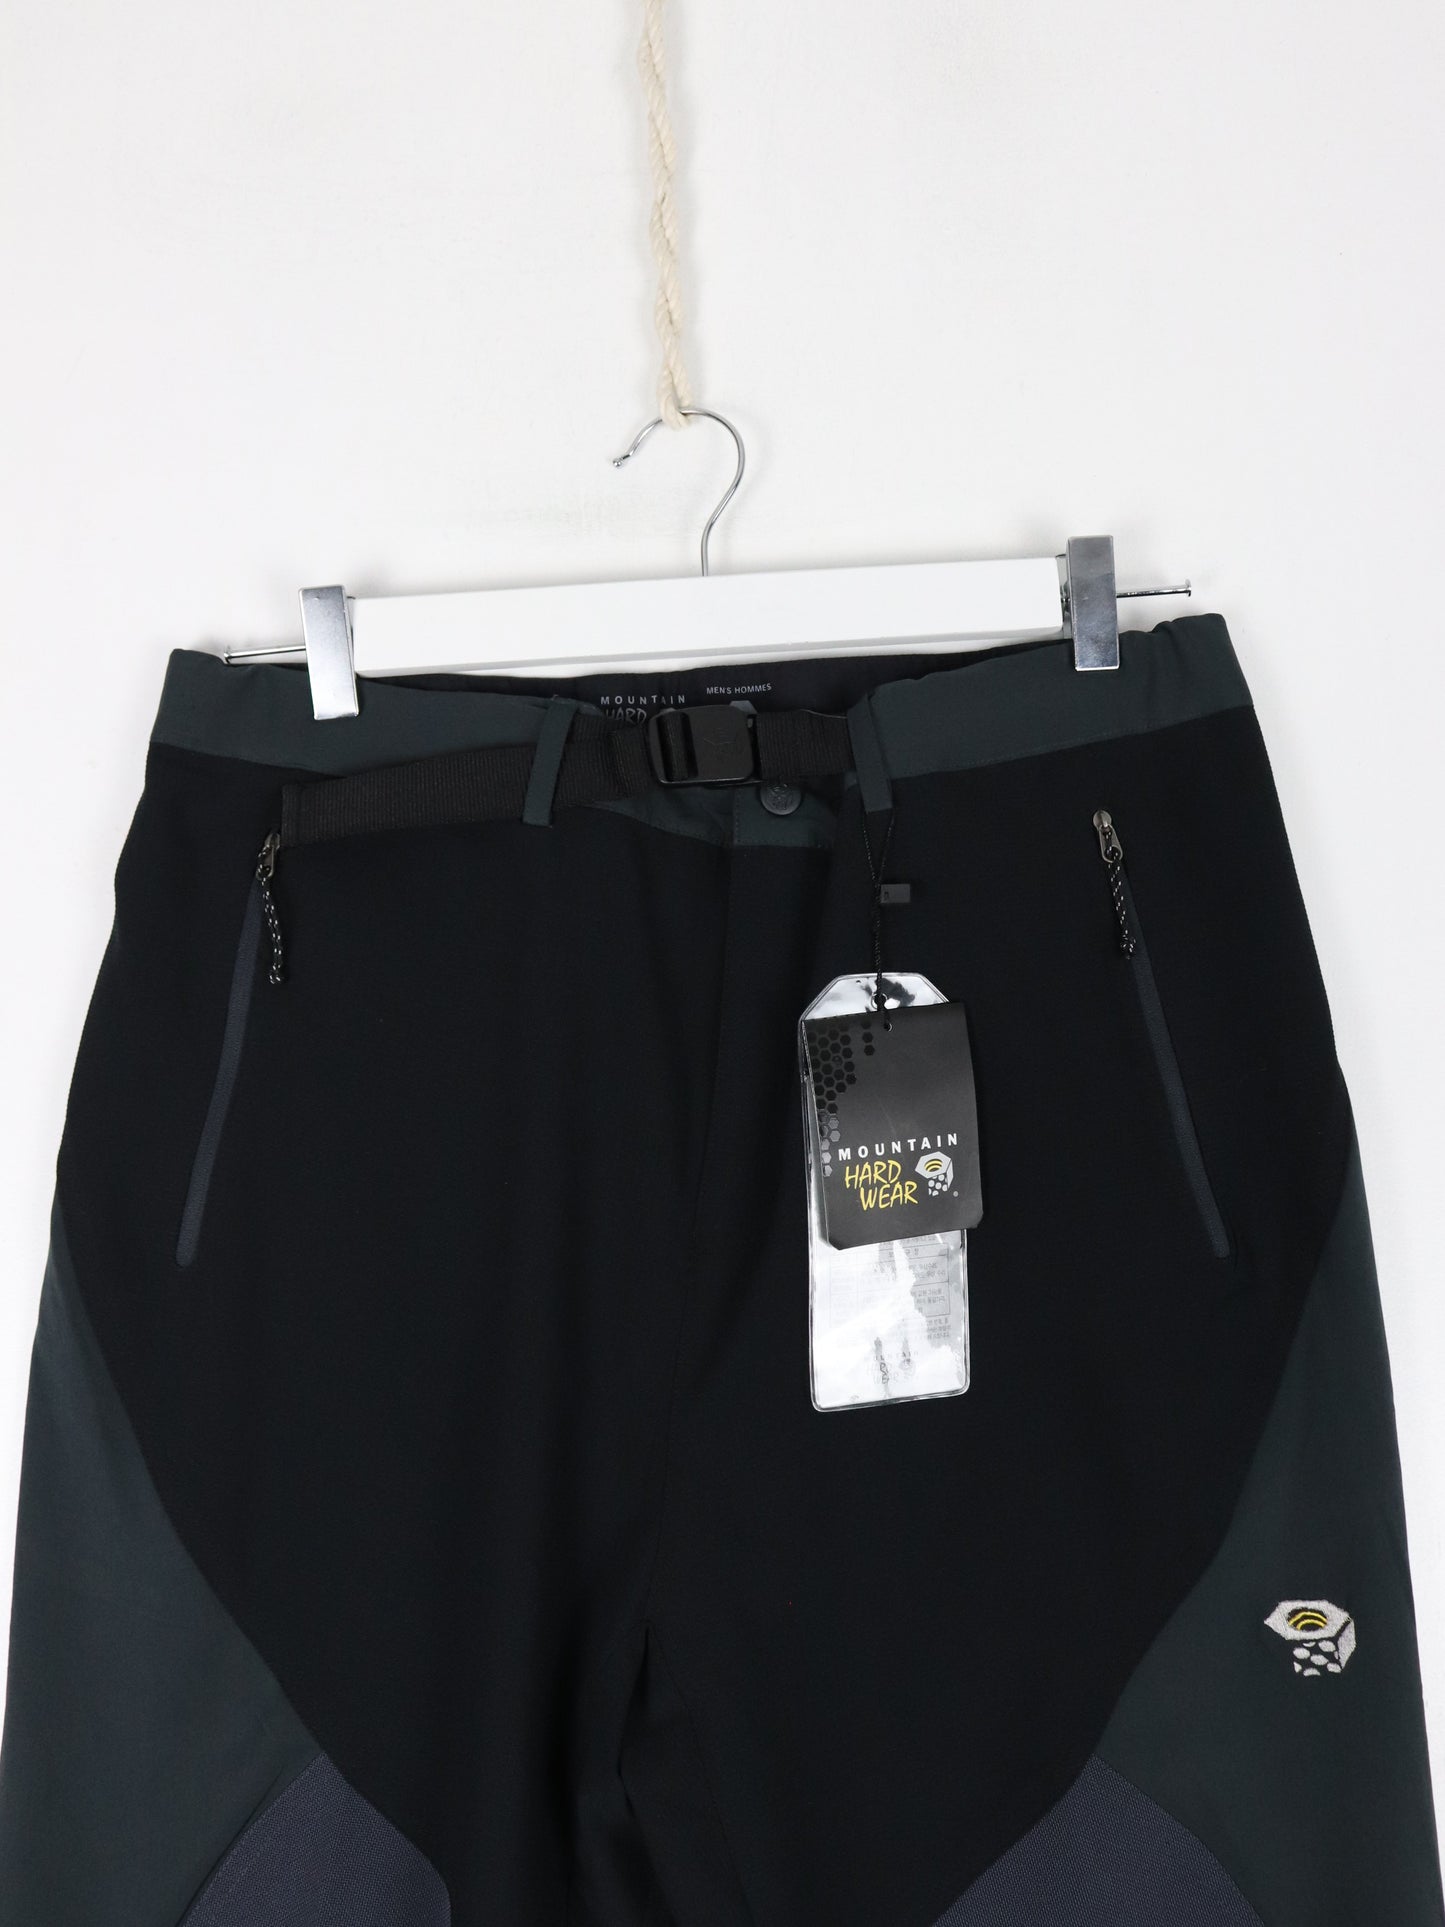 Mountain Hardwear Shorts 3/4 Length Mens Large Black Hiking Outdoors